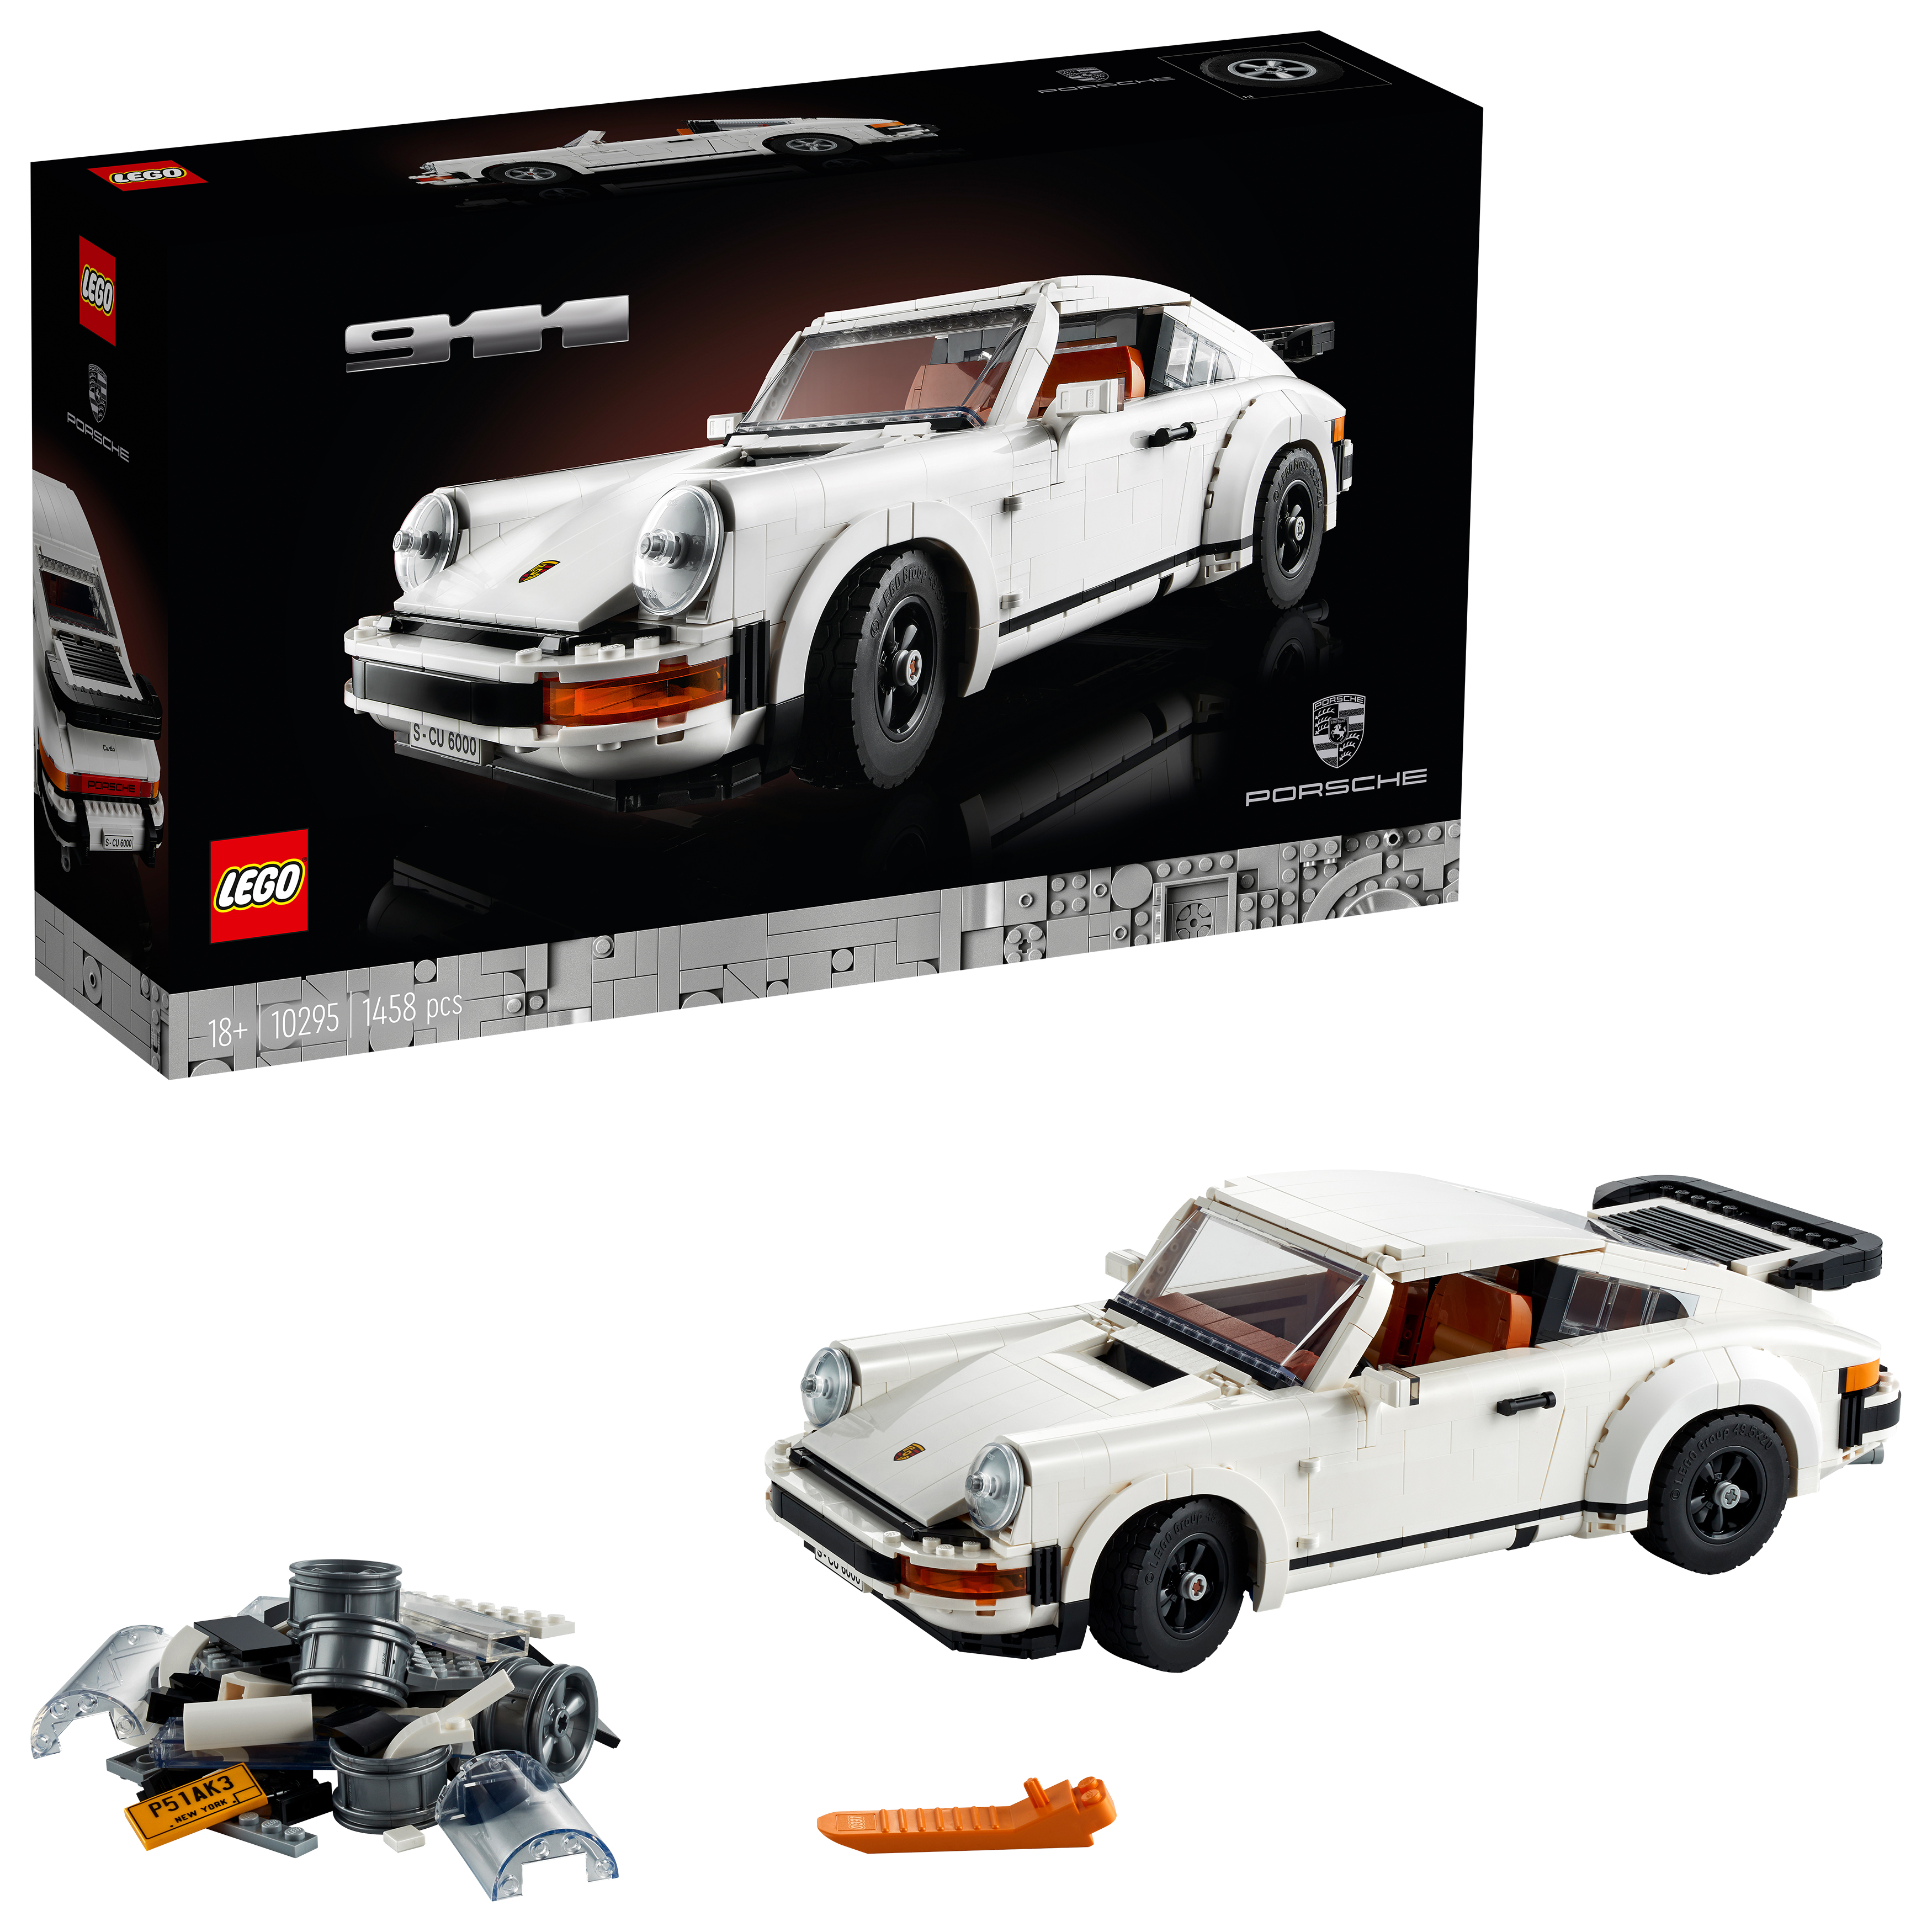 LEGO 10295 CREATOR EXPERT -  Porsche 911